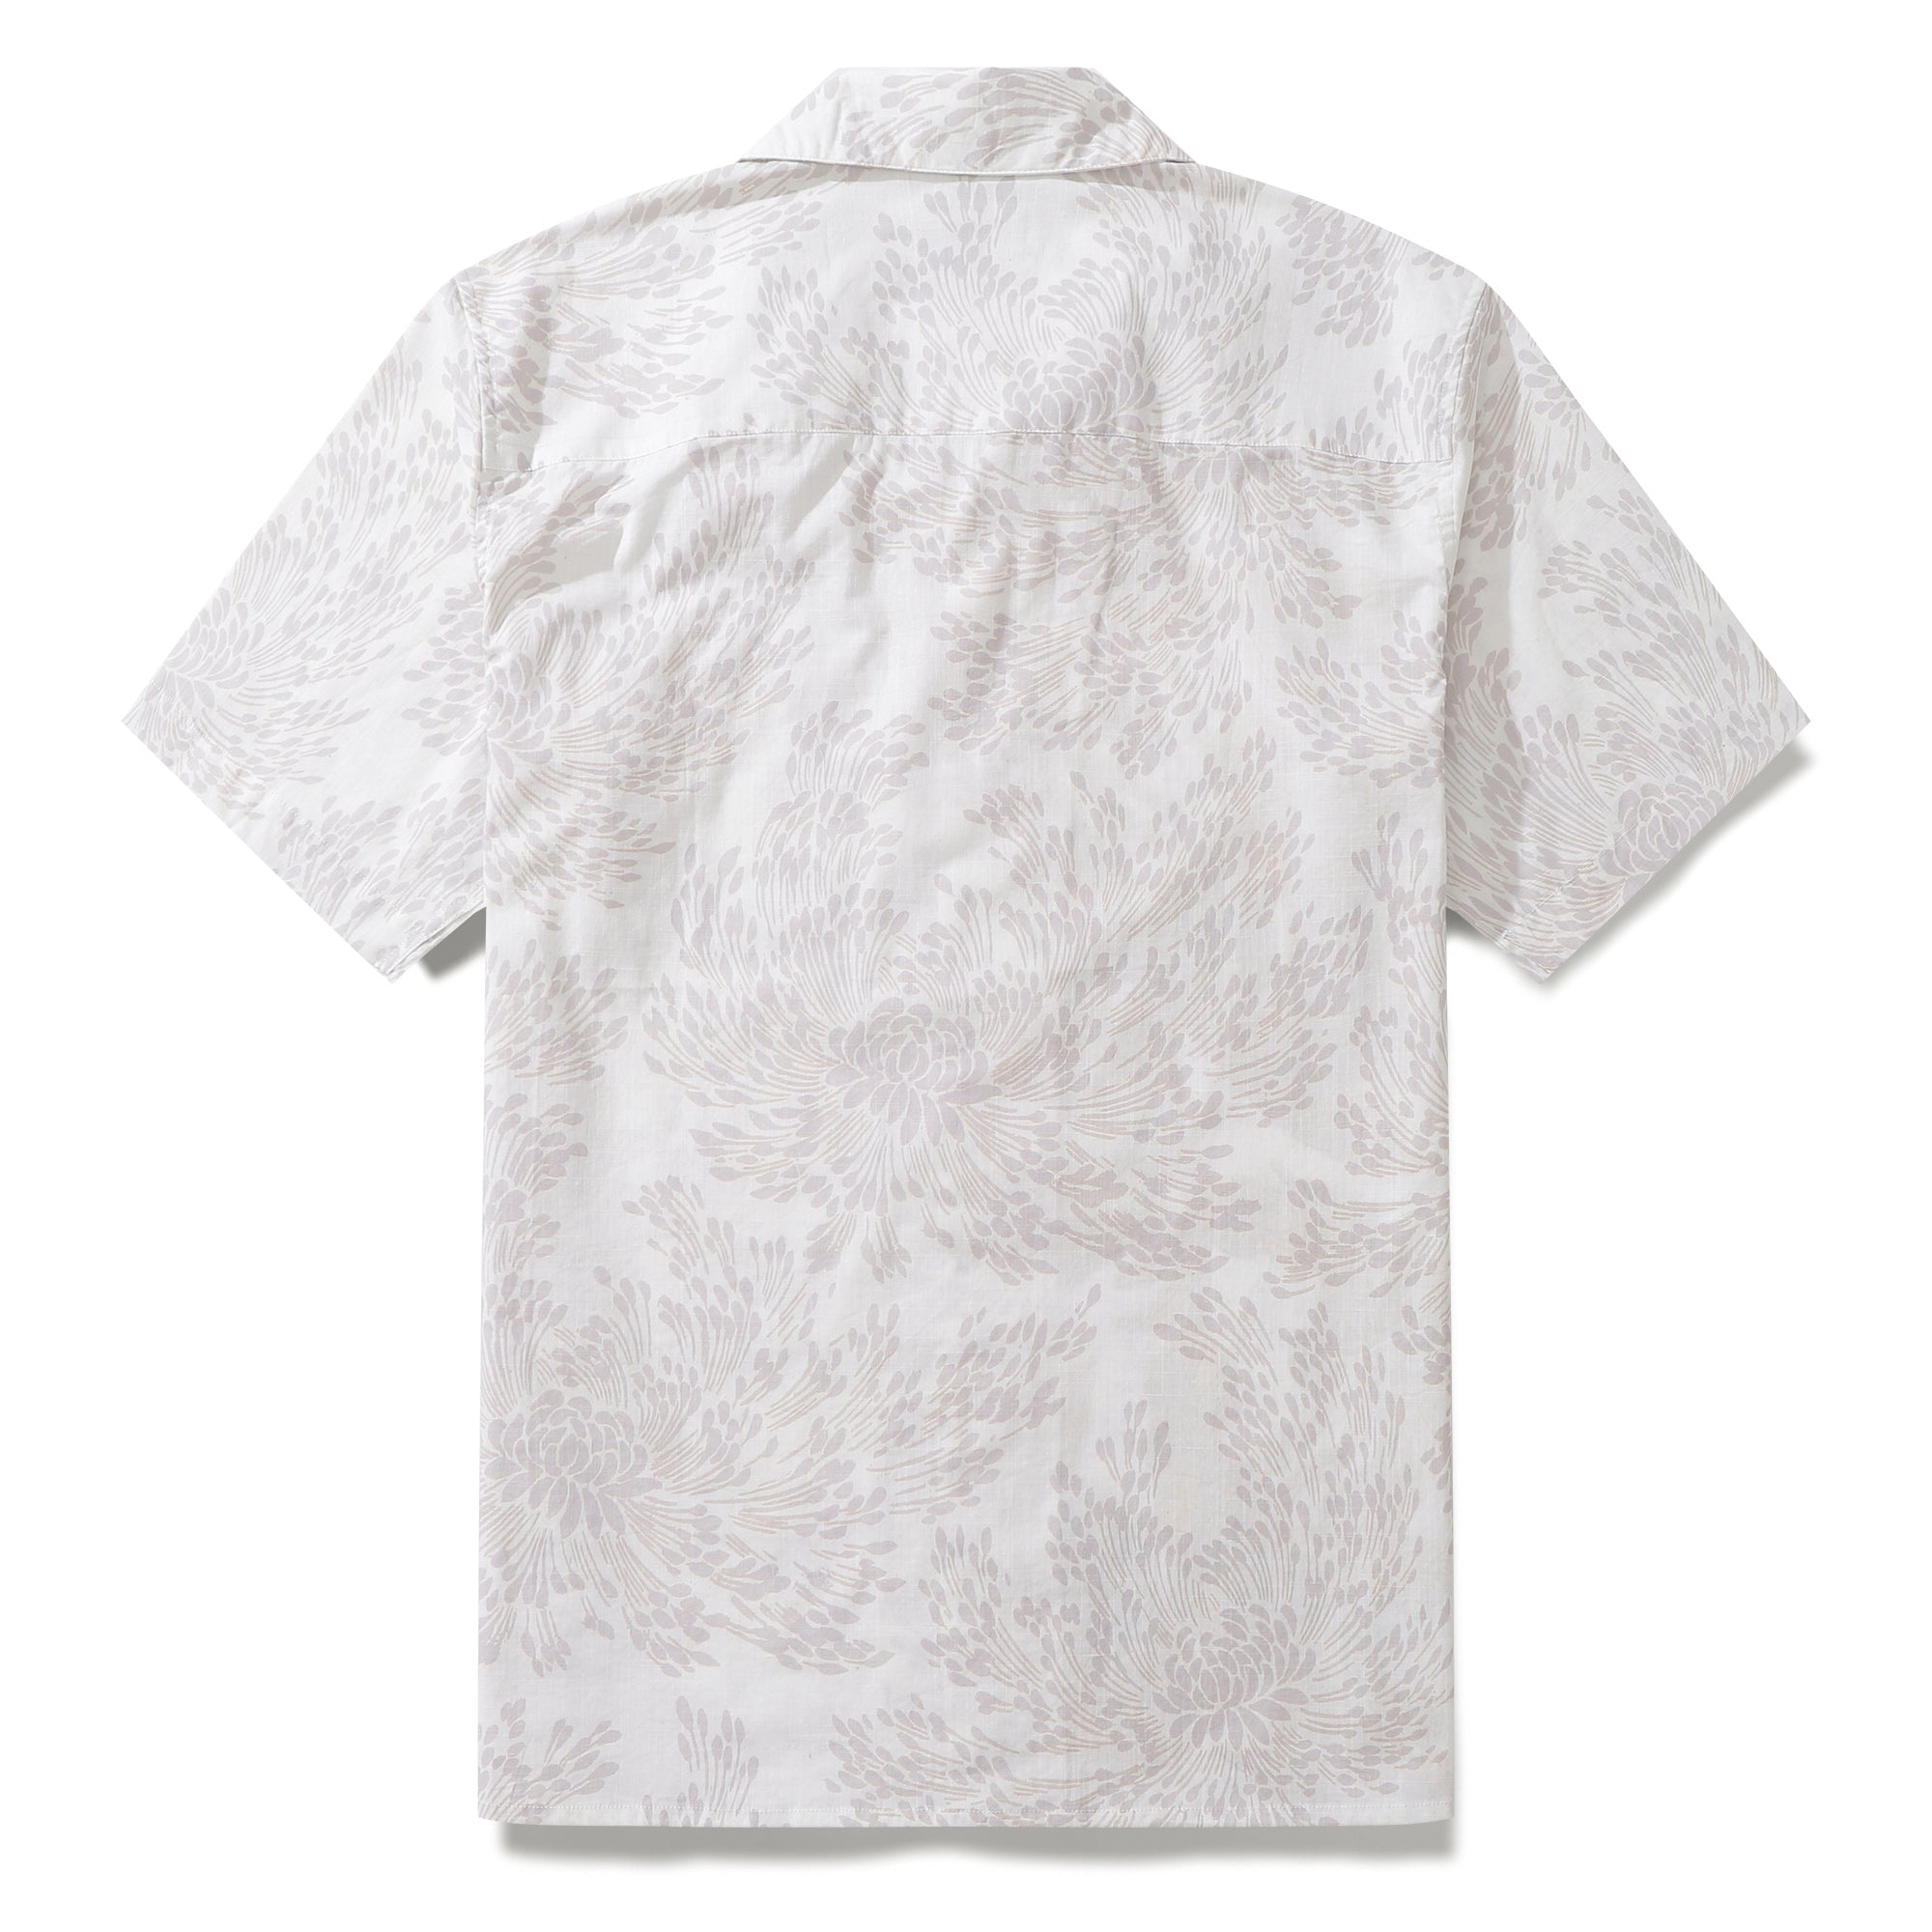 Hawaiian Shirt For Men Gorgeous Pattern Shirt Camp Collar 100% Cotton